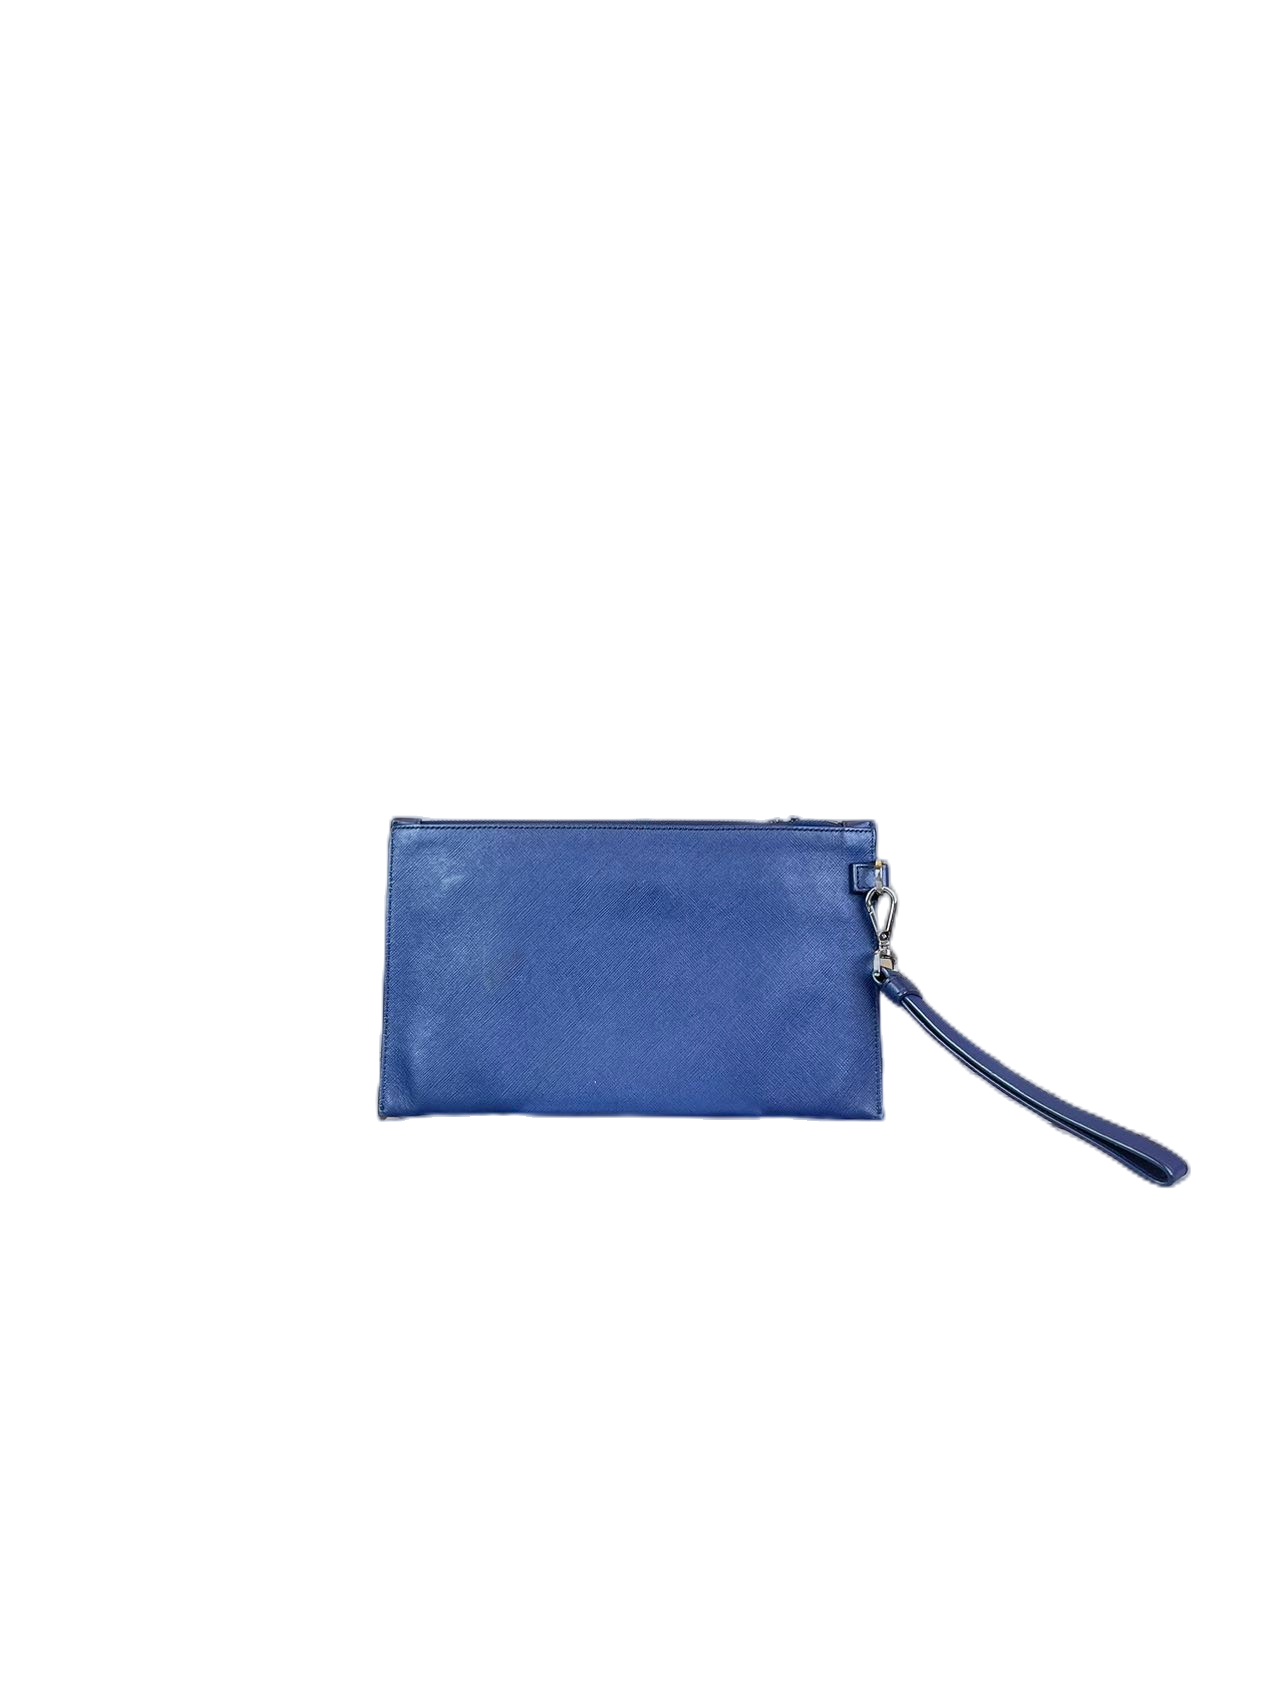 Versace Blue leather Clutches Handbag